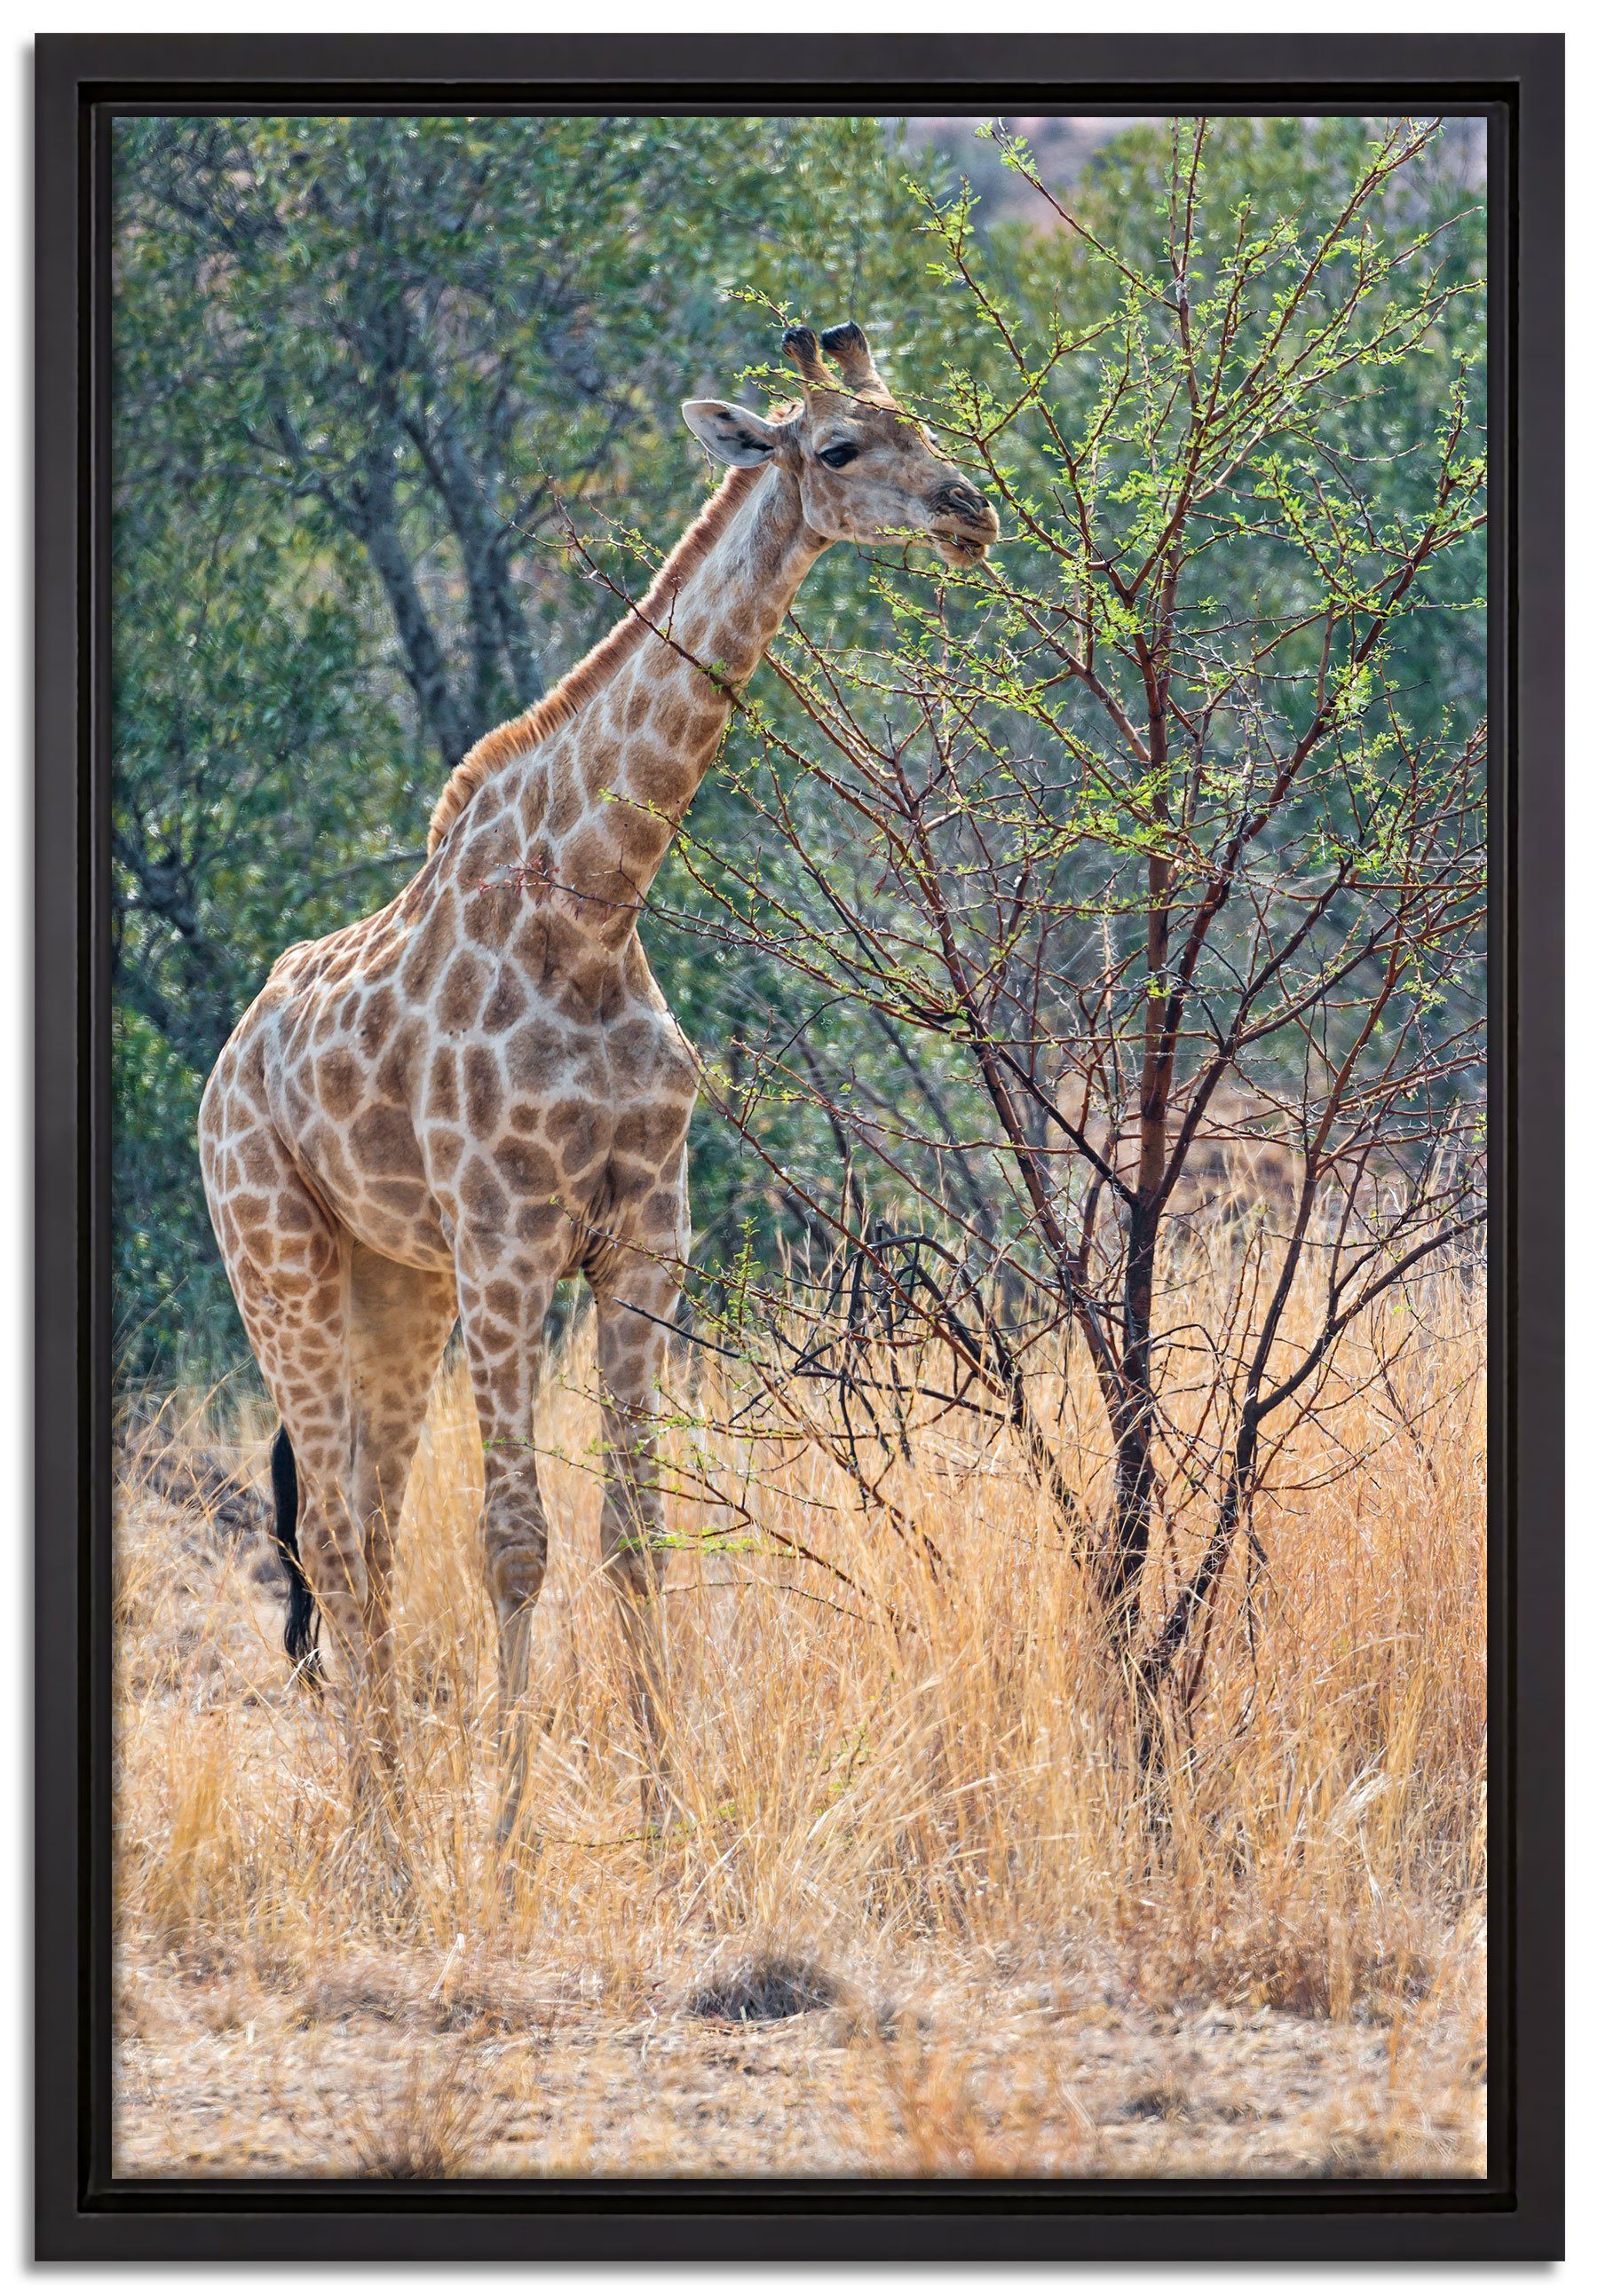 Pixxprint Leinwandbild Giraffe beim Fressen, Wanddekoration (1 St), Leinwandbild fertig bespannt, in einem Schattenfugen-Bilderrahmen gefasst, inkl. Zackenaufhänger